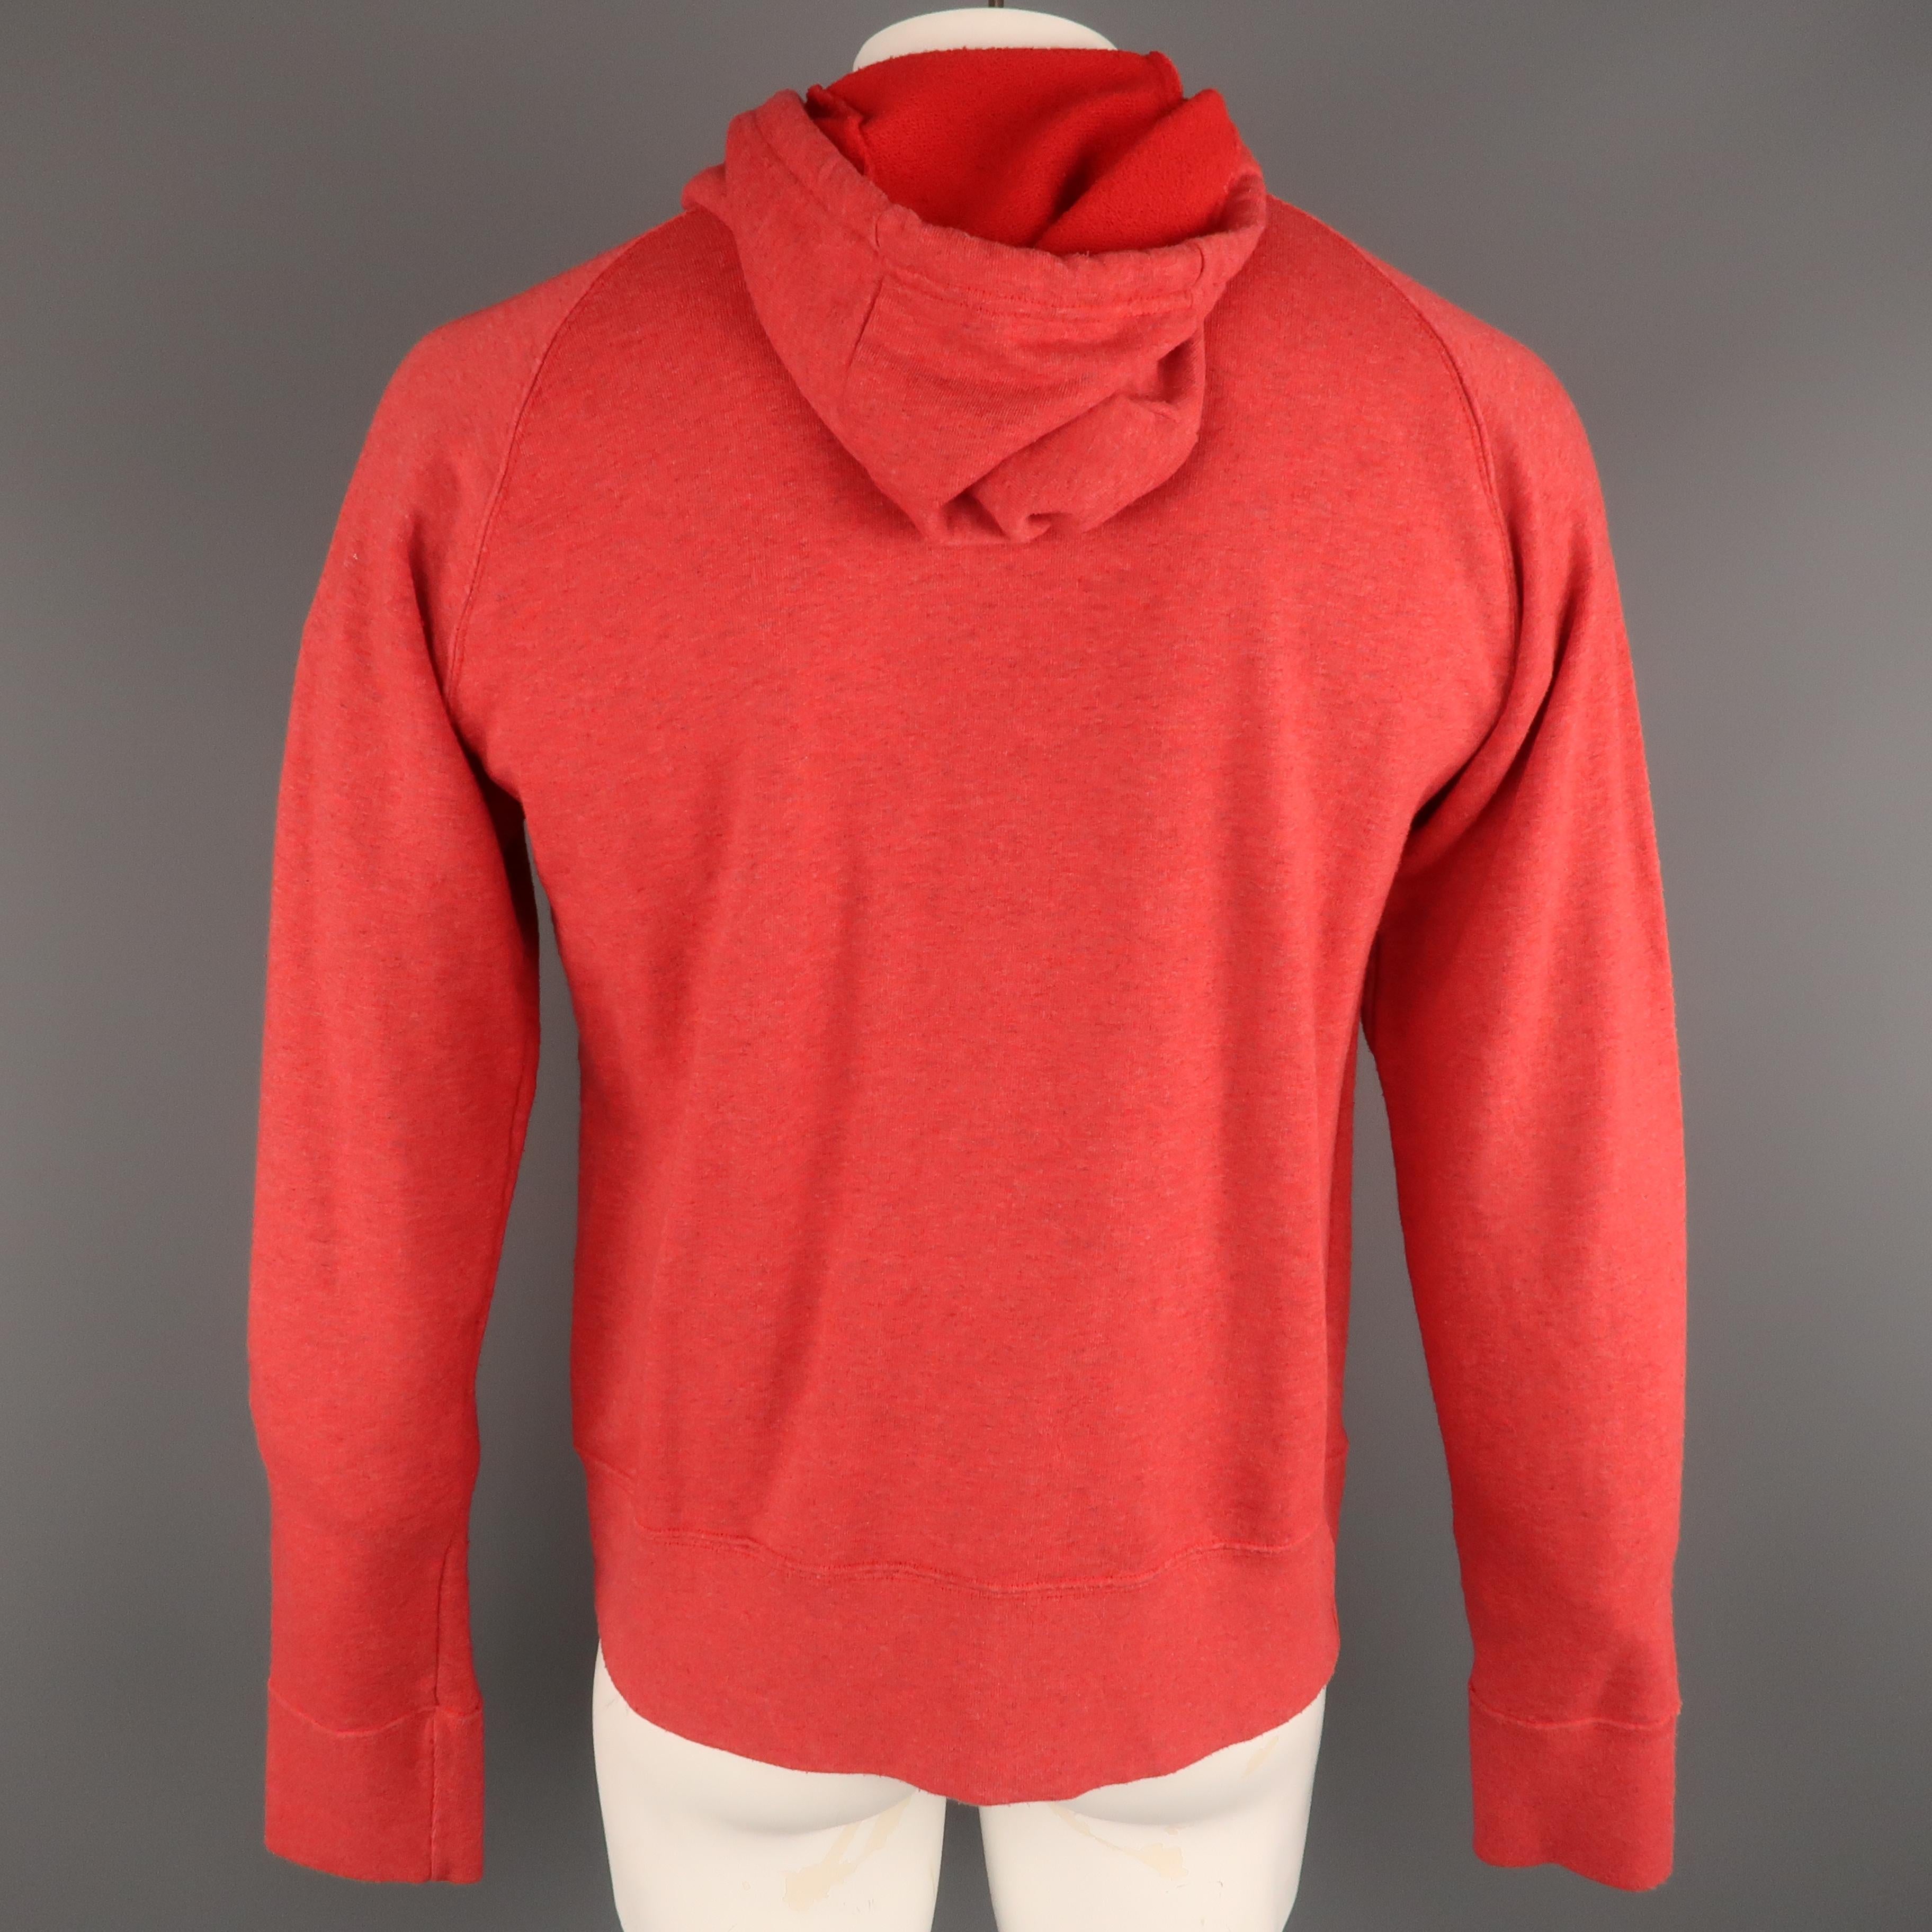 Men's WALTER VAN BEIRENDONCK Size M Red Graphic Cotton Hooded Sweatshirt Sweater